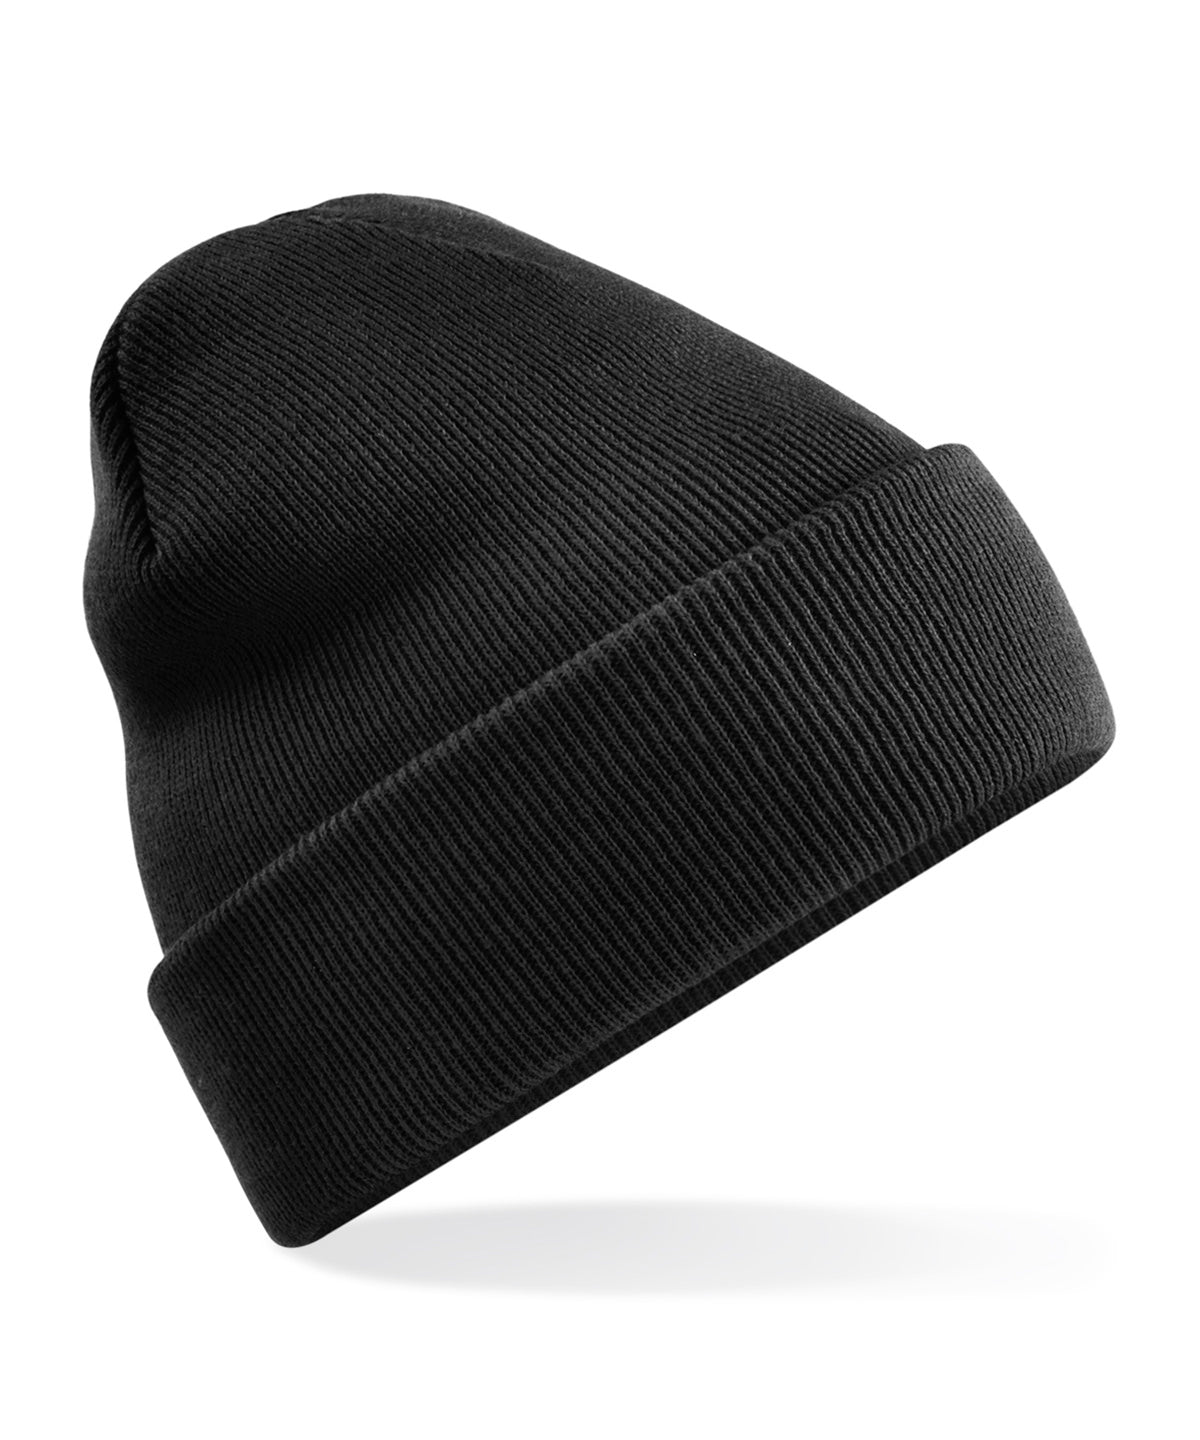 Personalised Hats - Black Beechfield Recycled original cuffed beanie